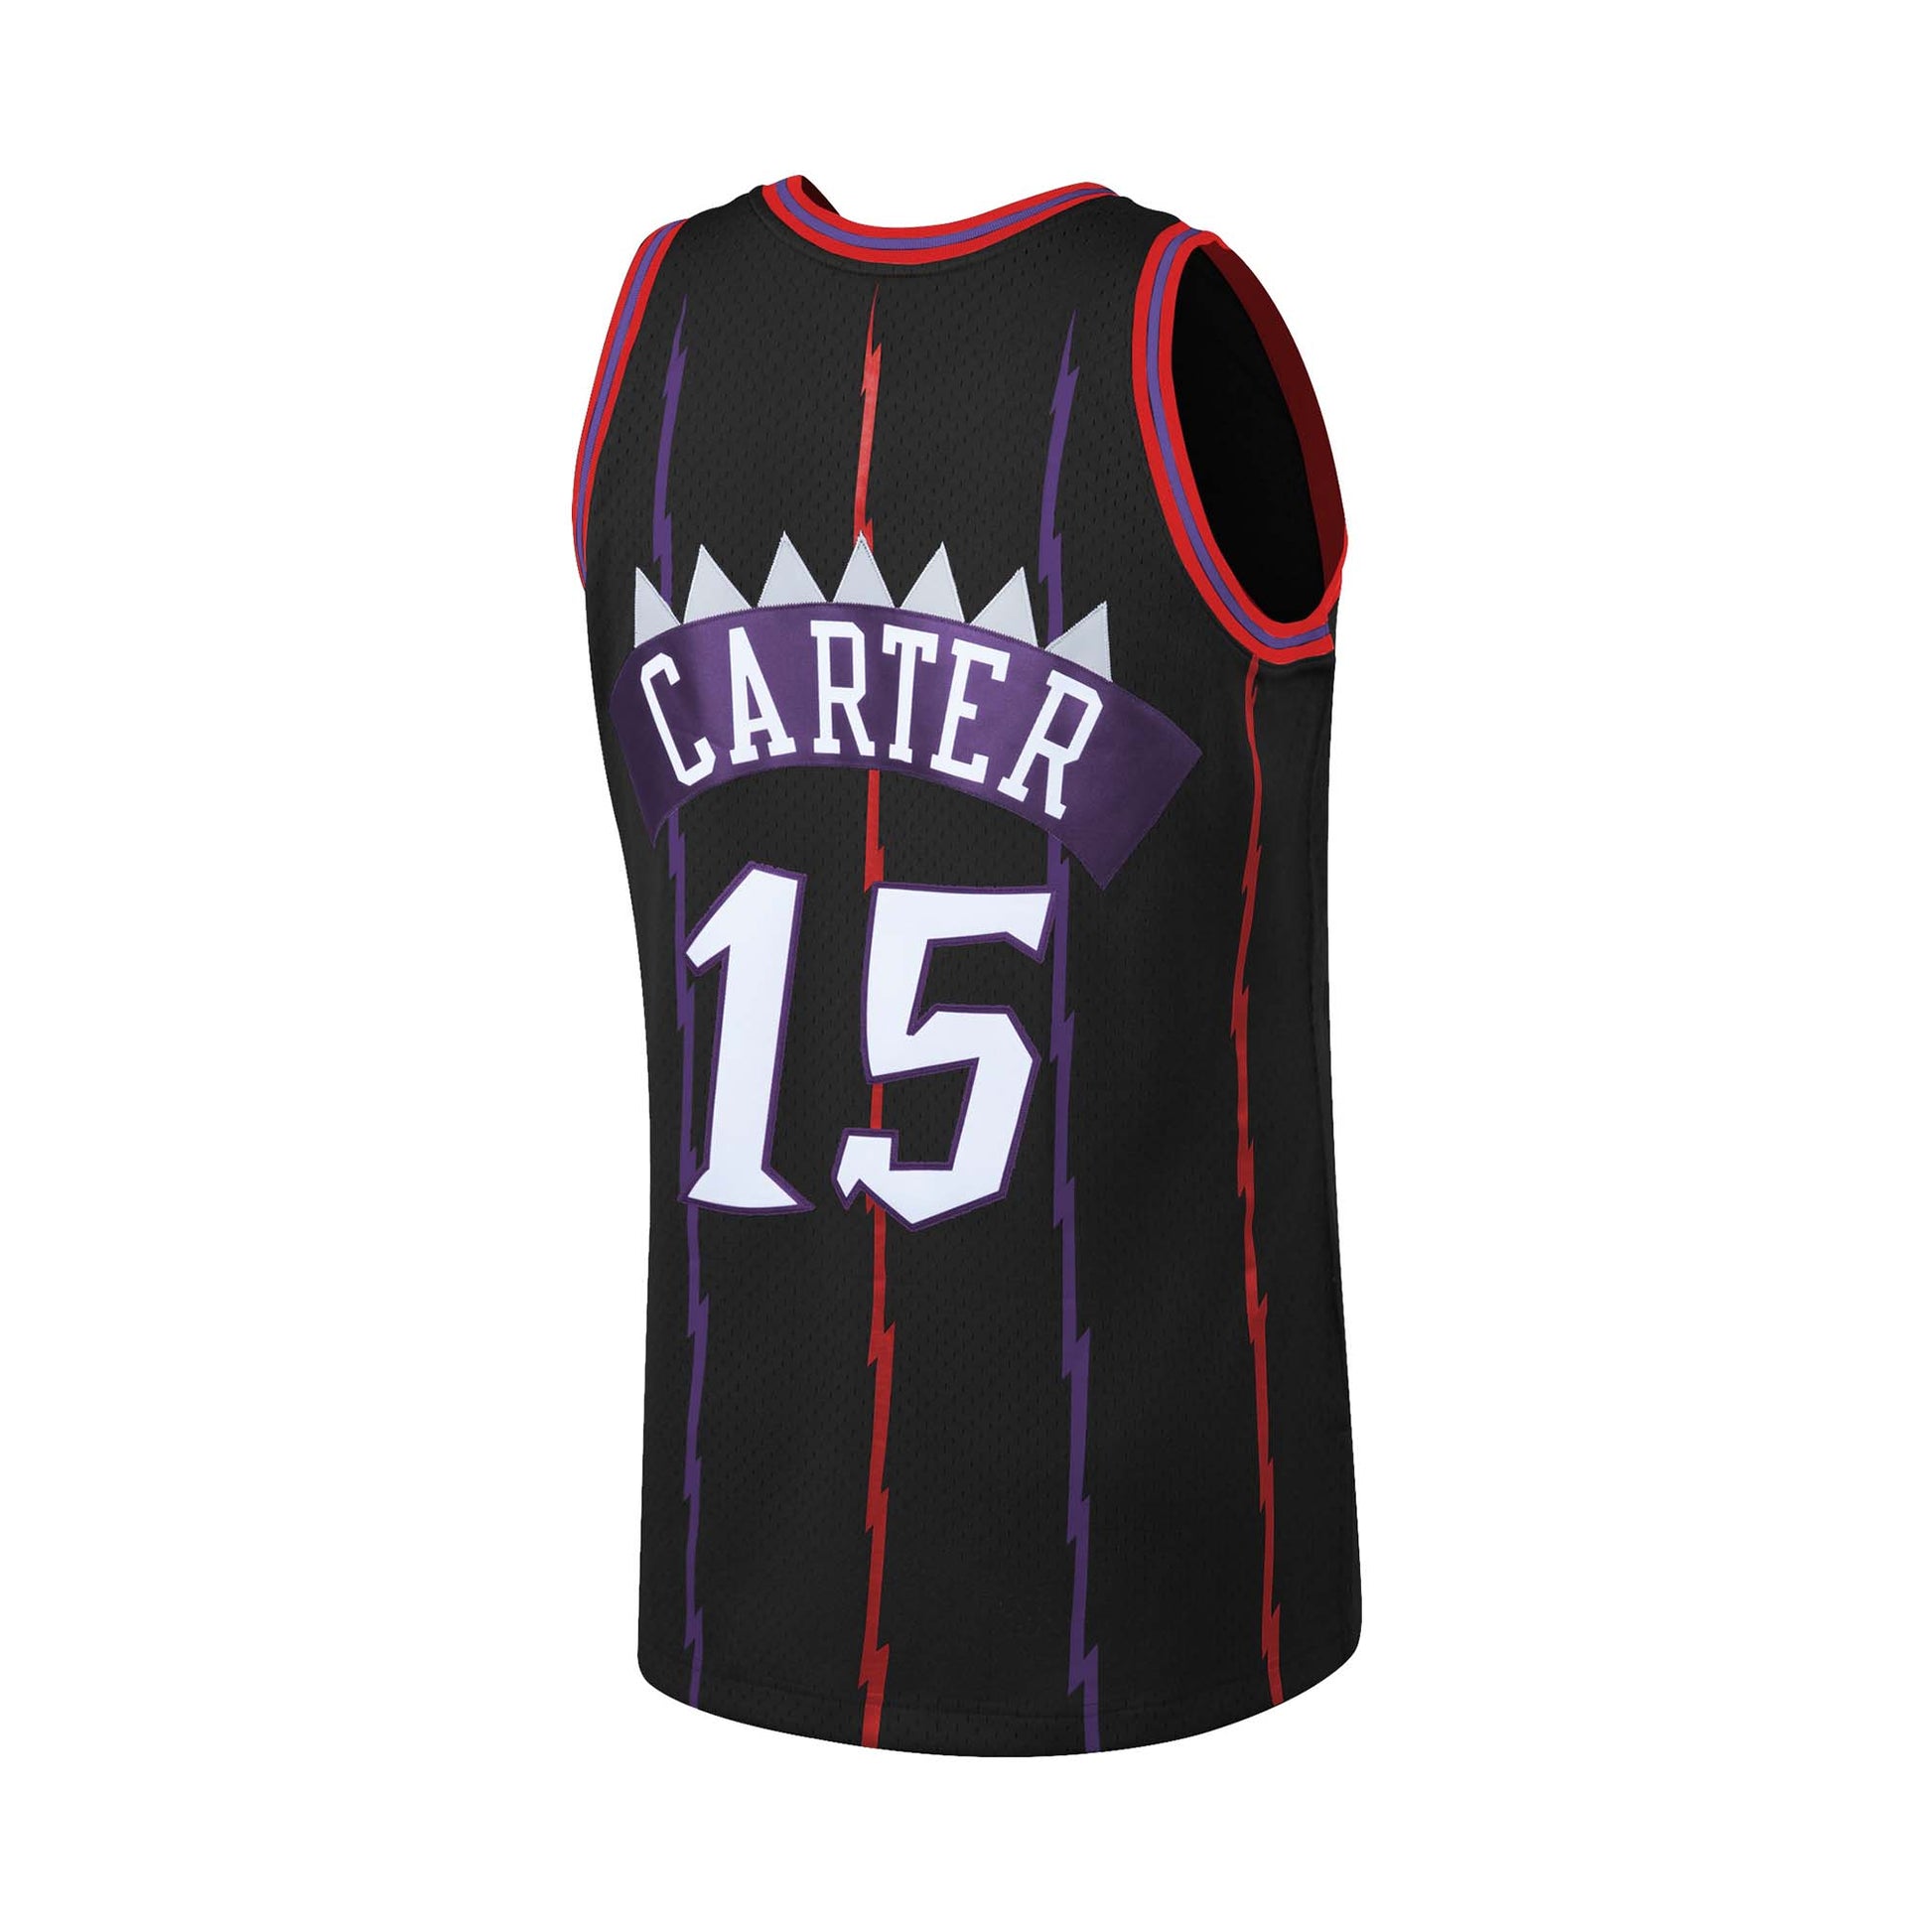 Vince Carter 15 Toronto Raptors 1999-00 Mitchell & Ness Swingman Jersey